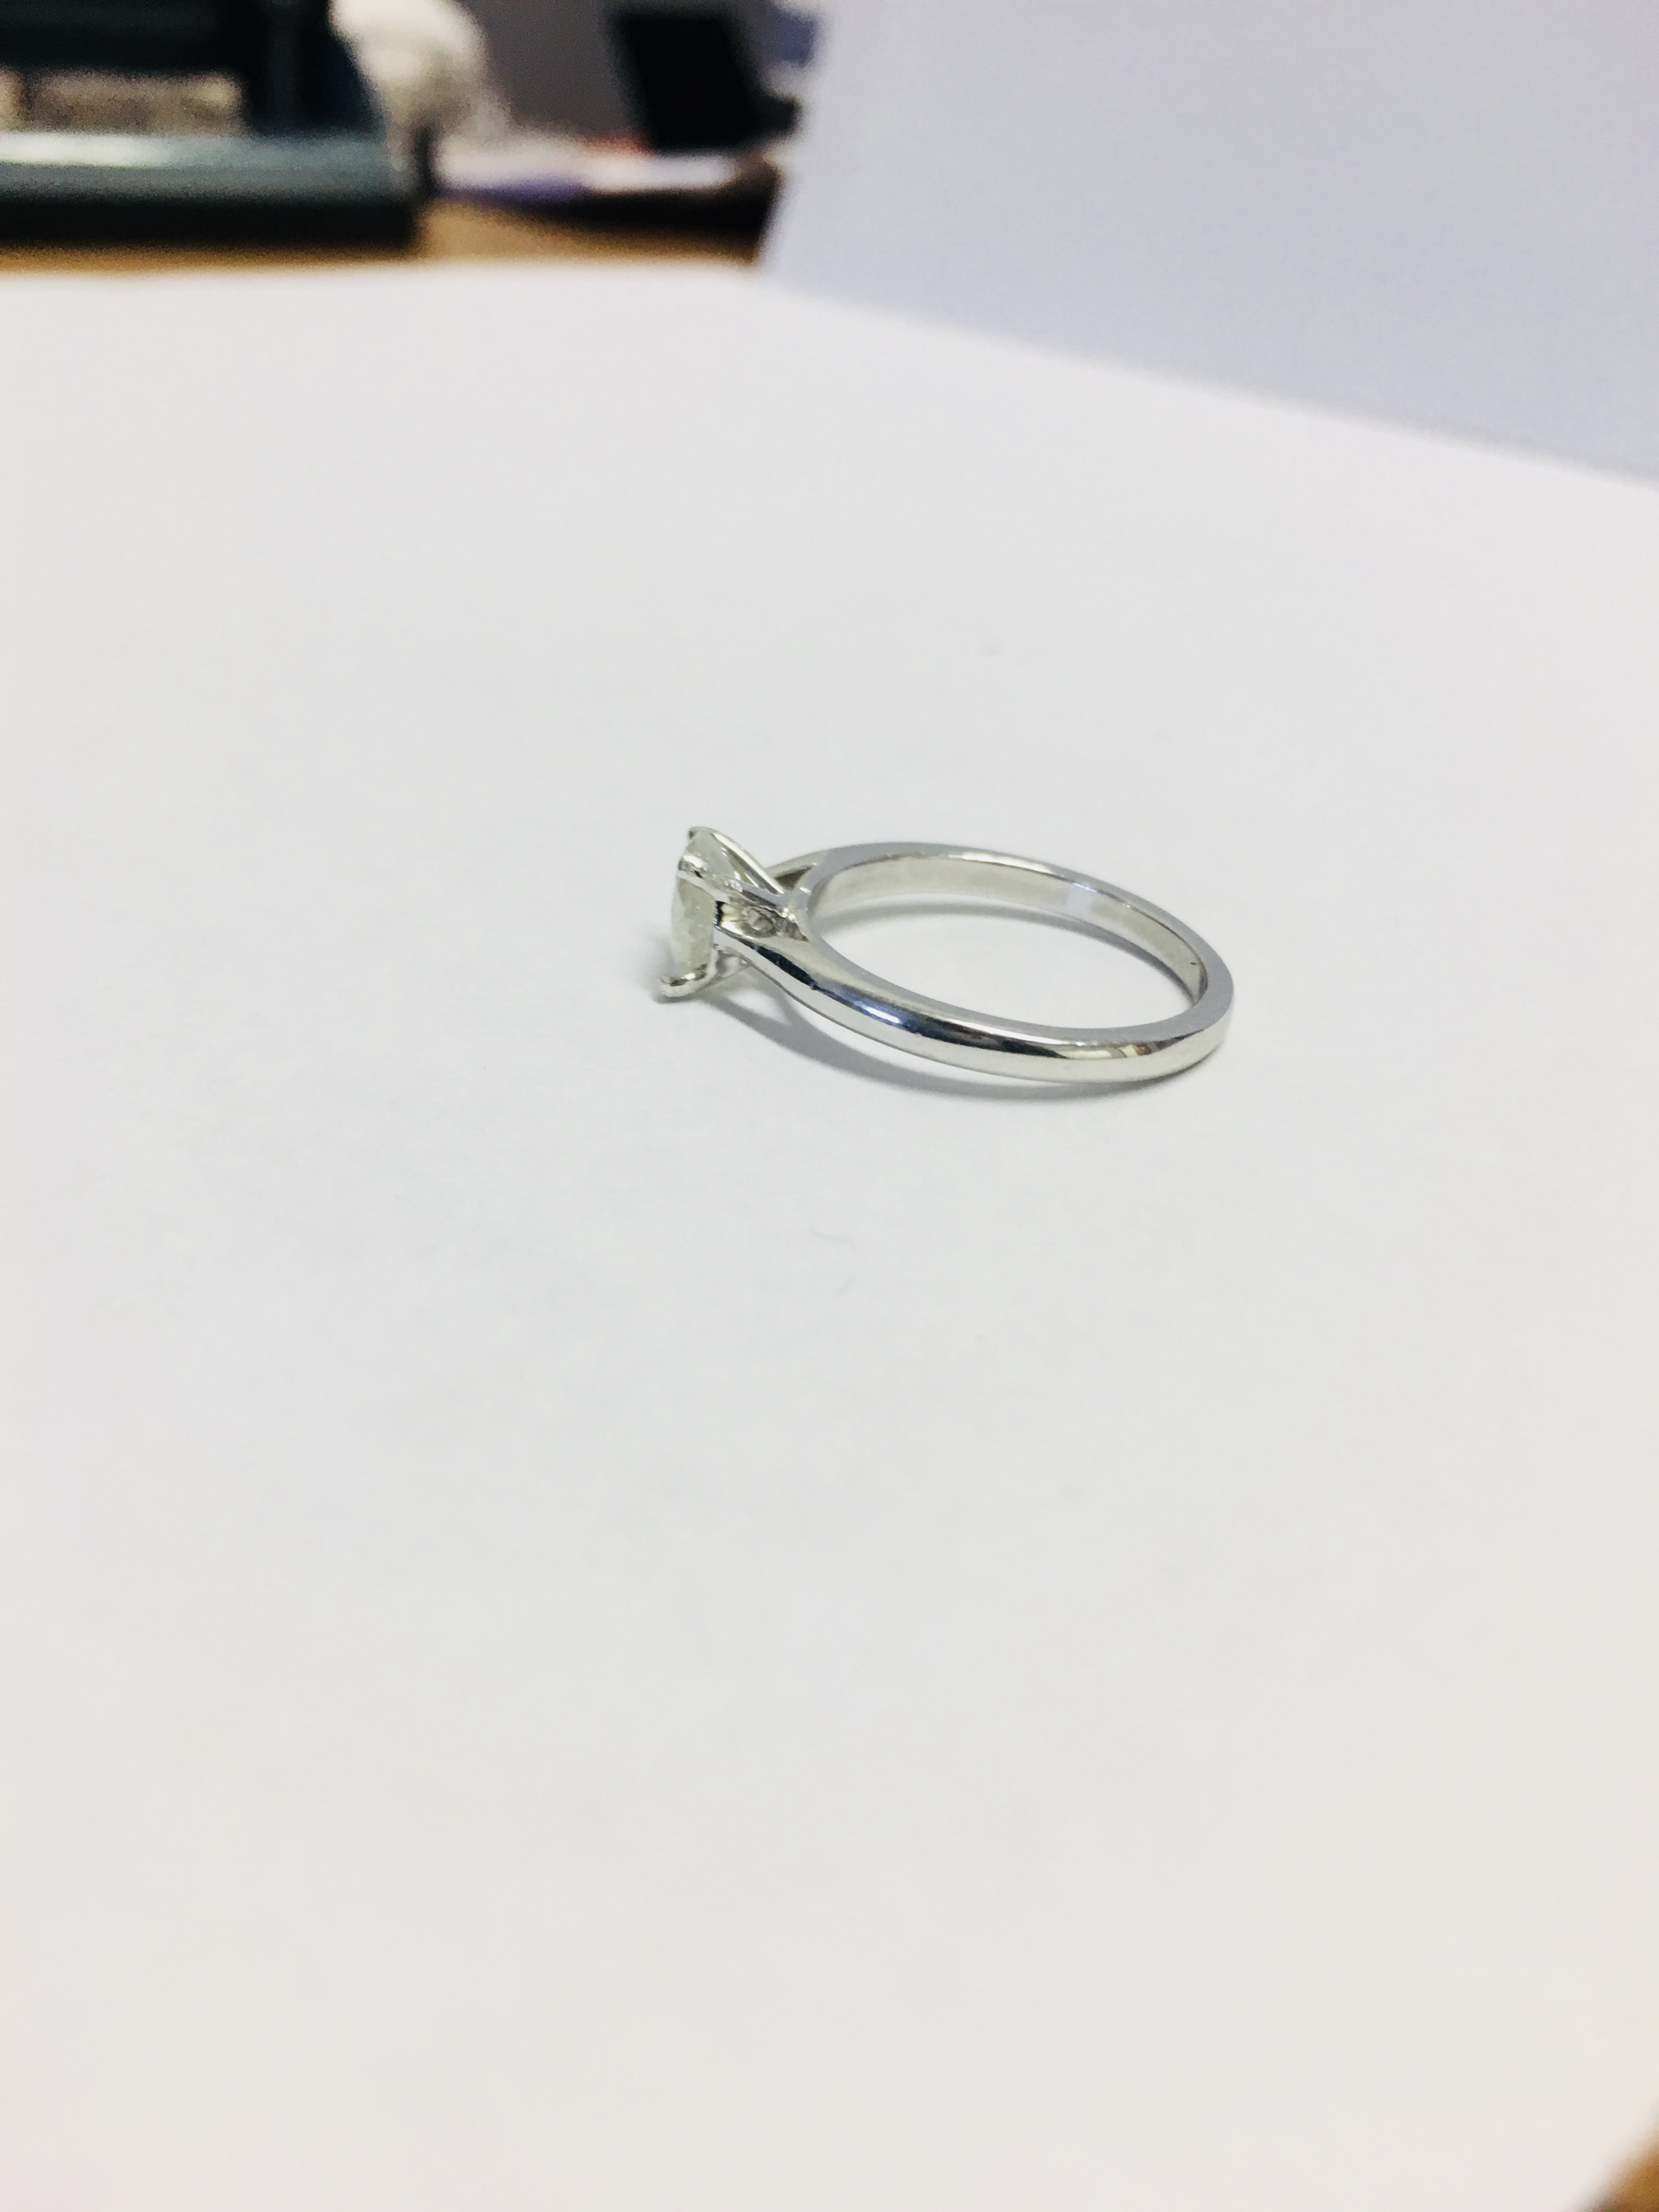 1Ct Brilliant Cut Diamond Solitaire Ring, - Image 2 of 5